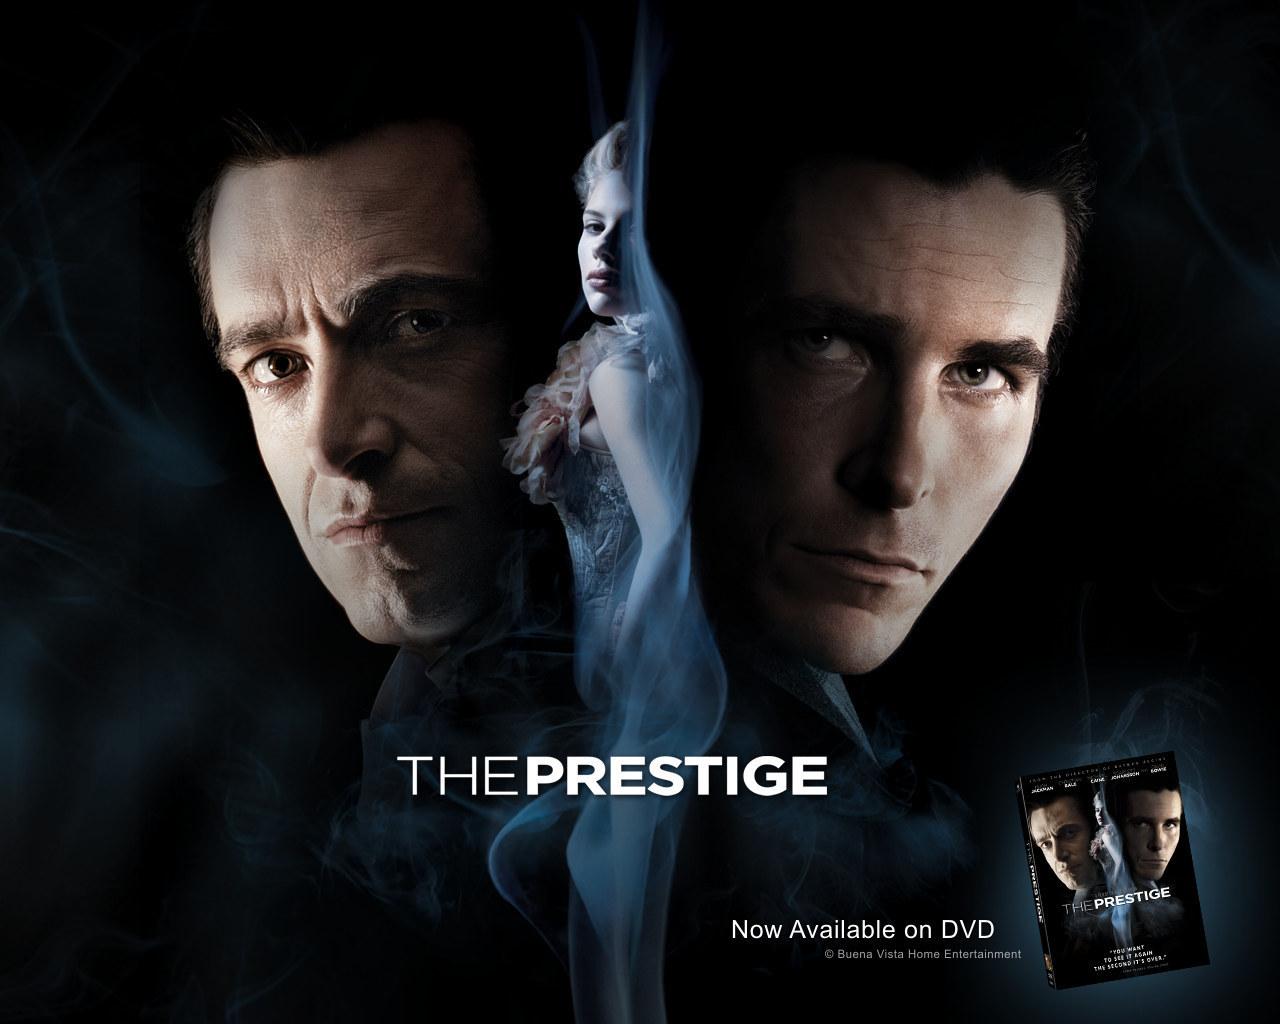 The Prestige image The Prestige HD wallpaper and background photo